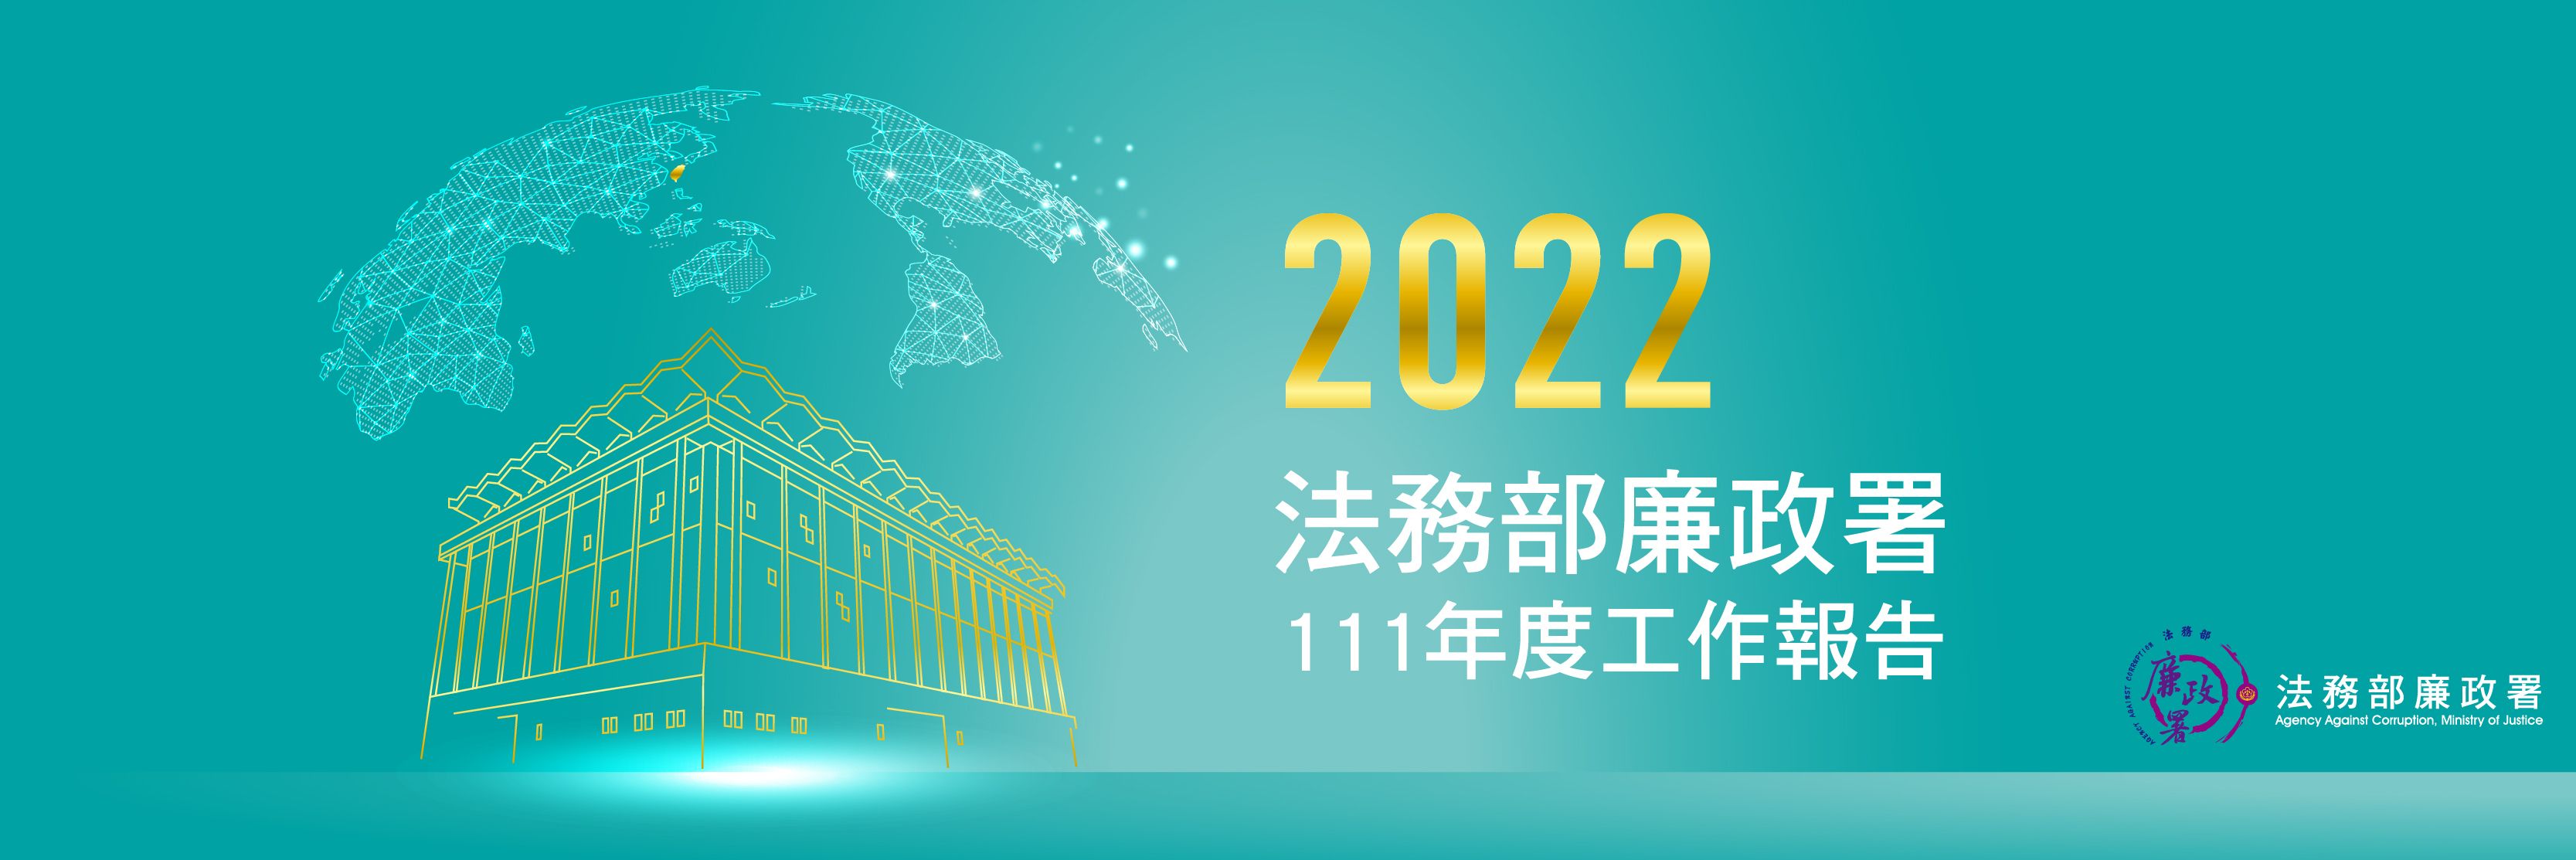 AAC廉政署2022 banner 中文